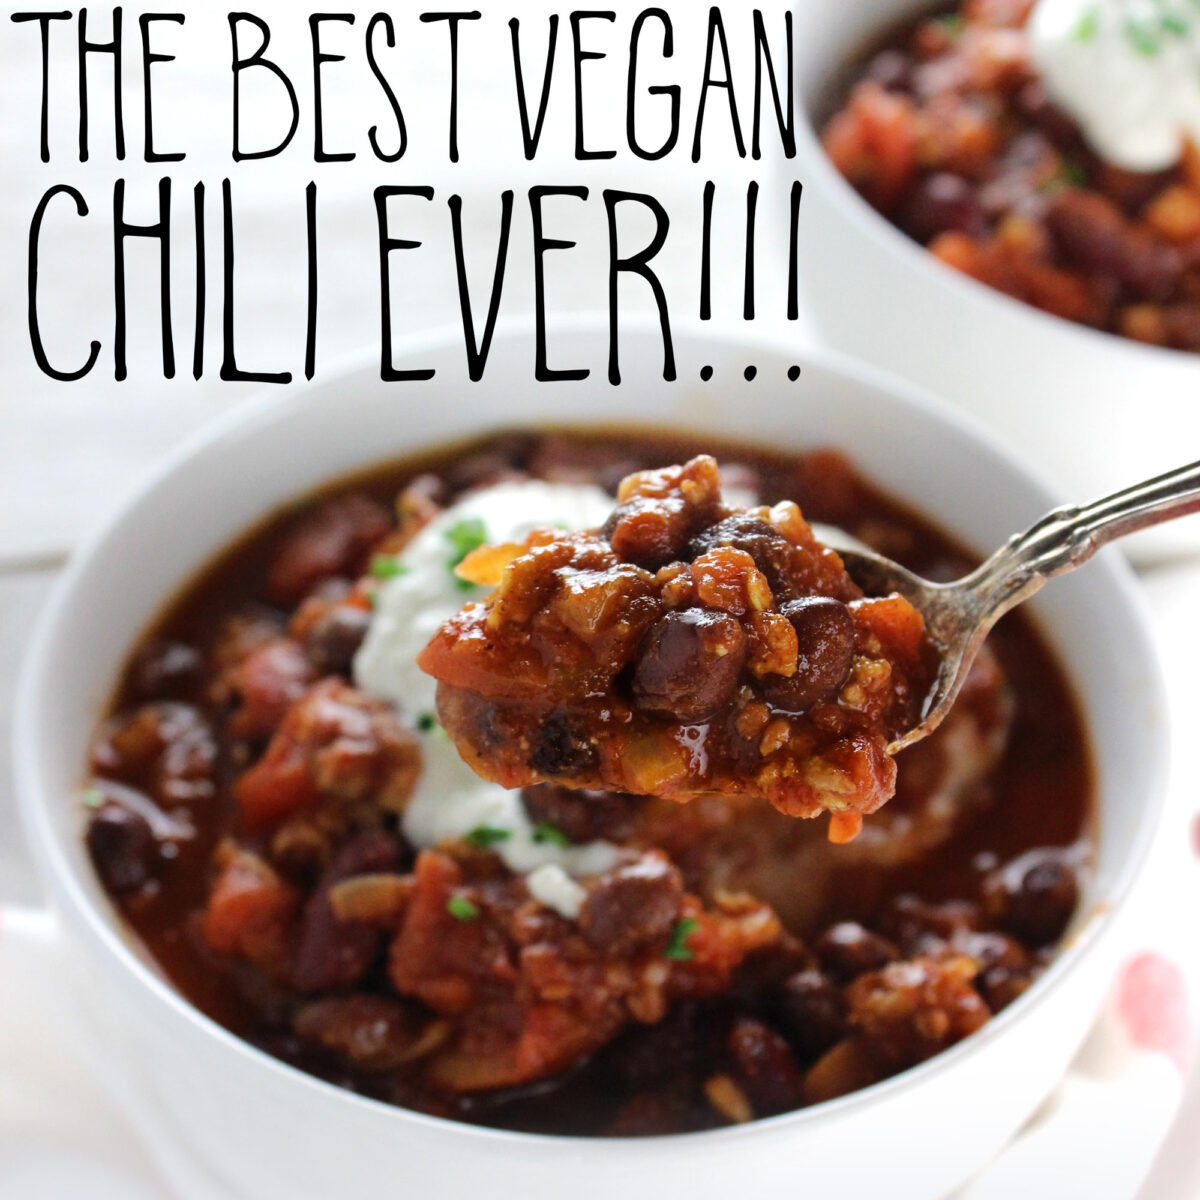 The Best Vegan Chili Ever!